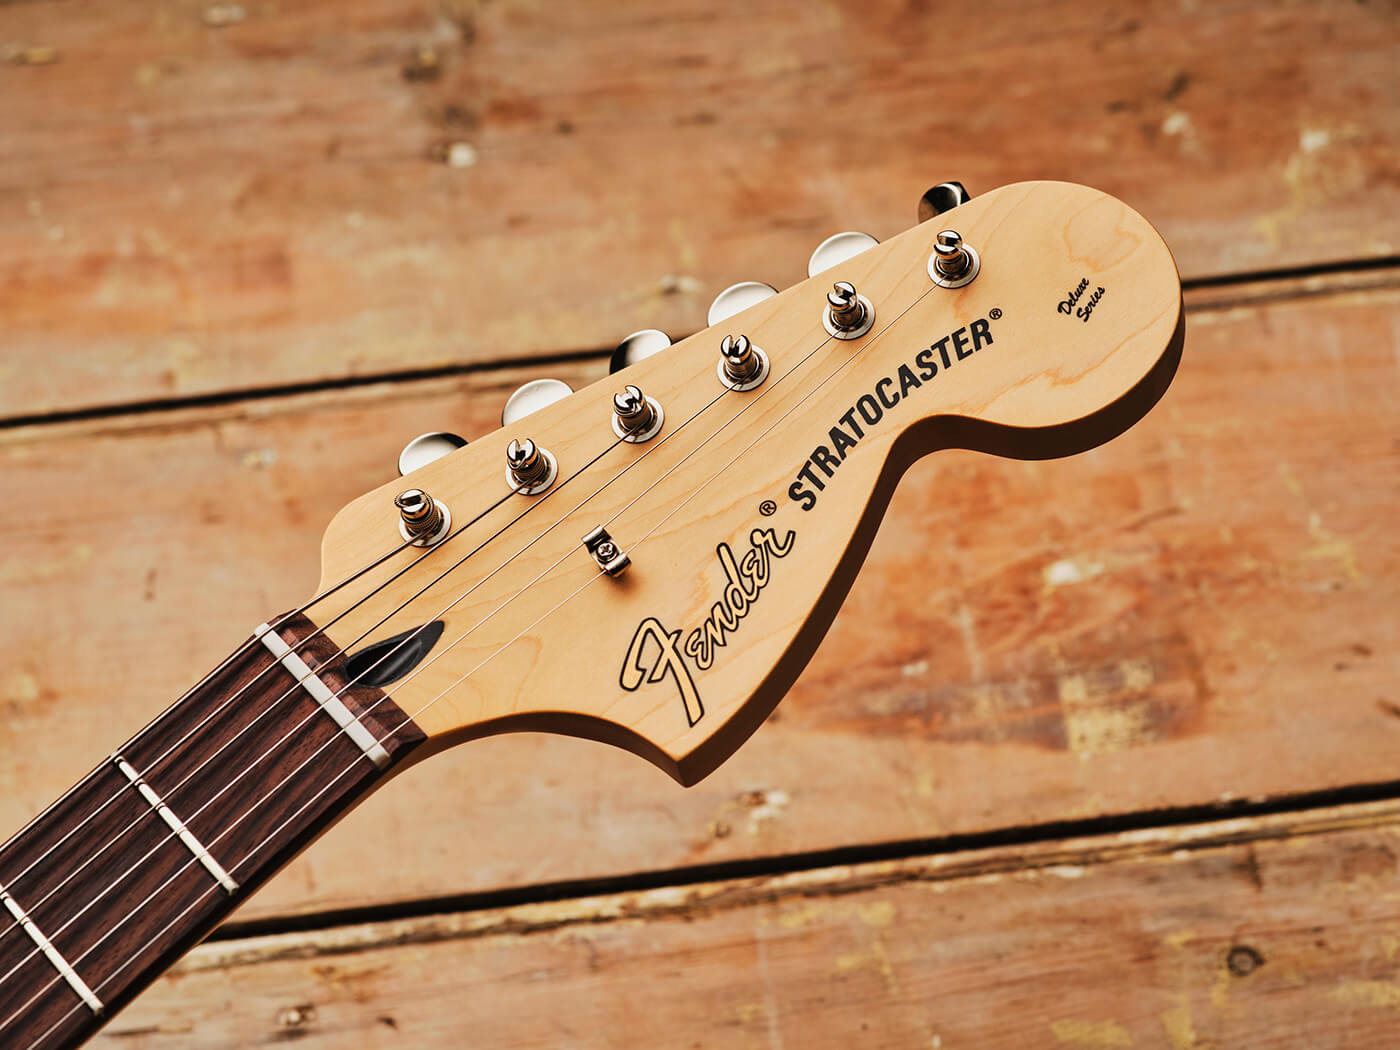 Fender Tom DeLonge Stratocaster headstock by Adam Gasson